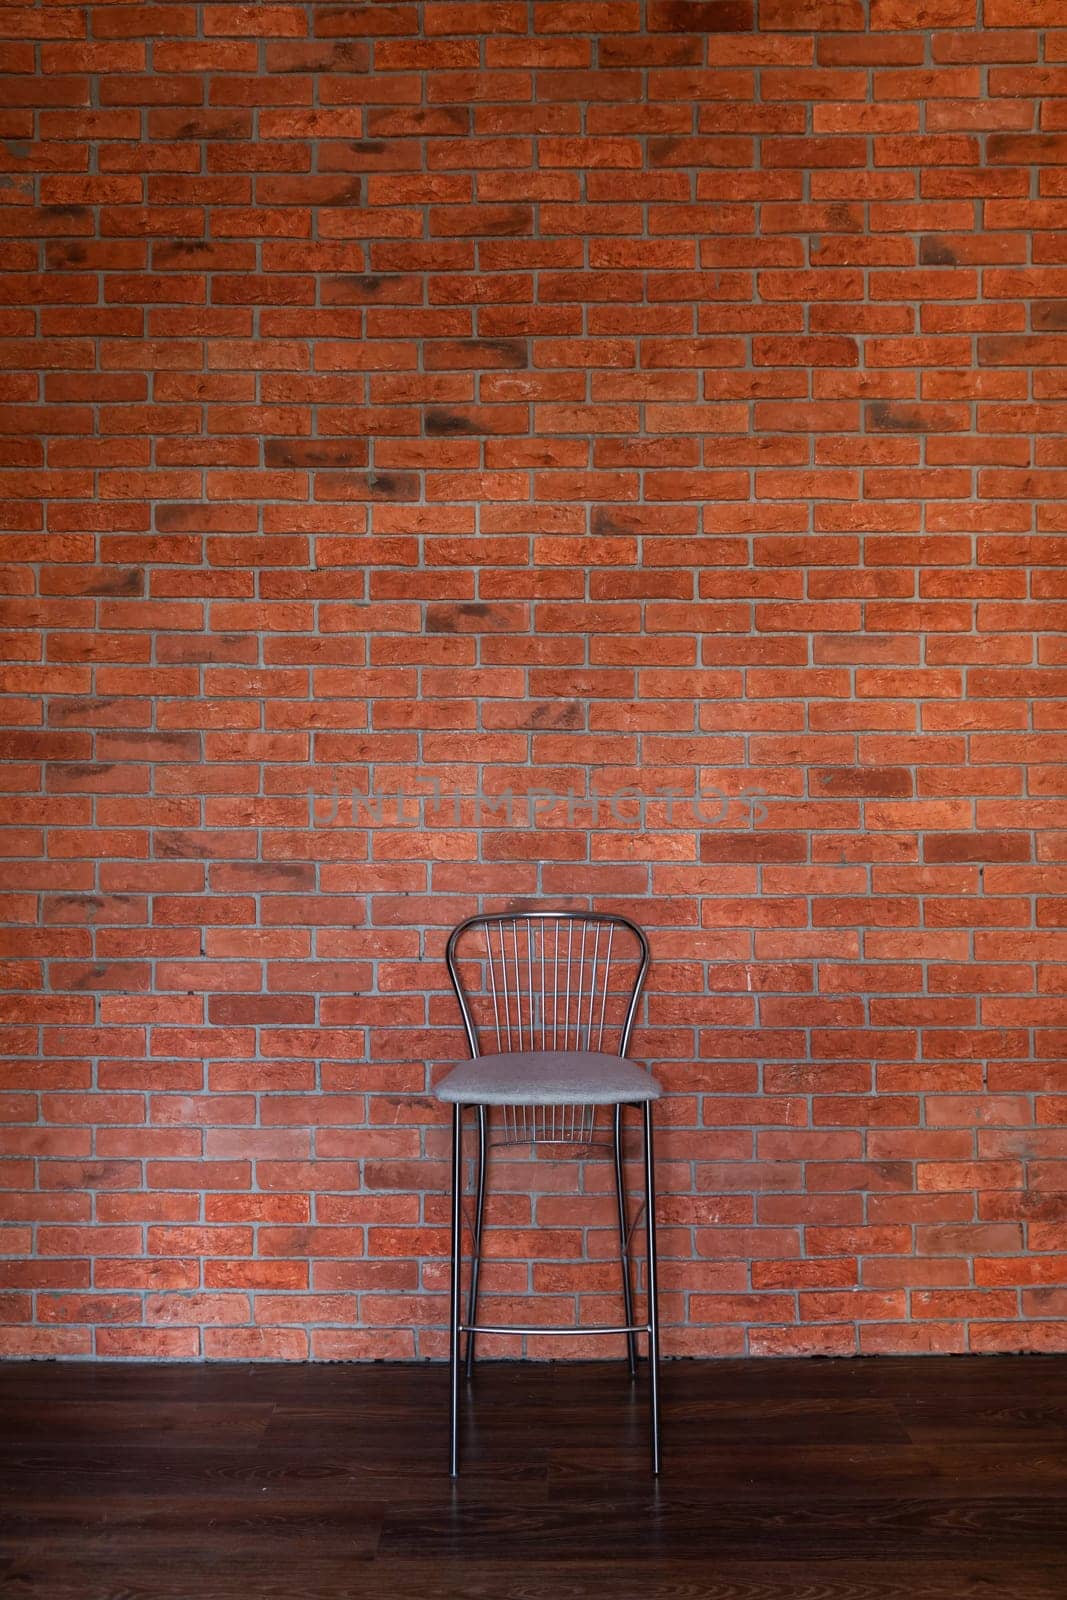 High bar stool against a brick wall by Simakov